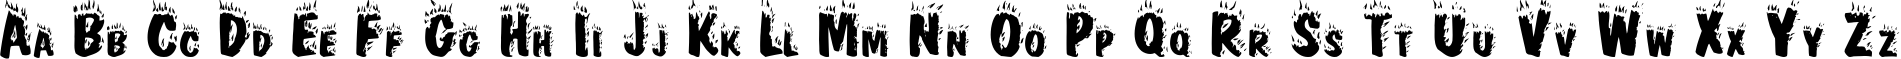 Пример написания английского алфавита шрифтом FIRE